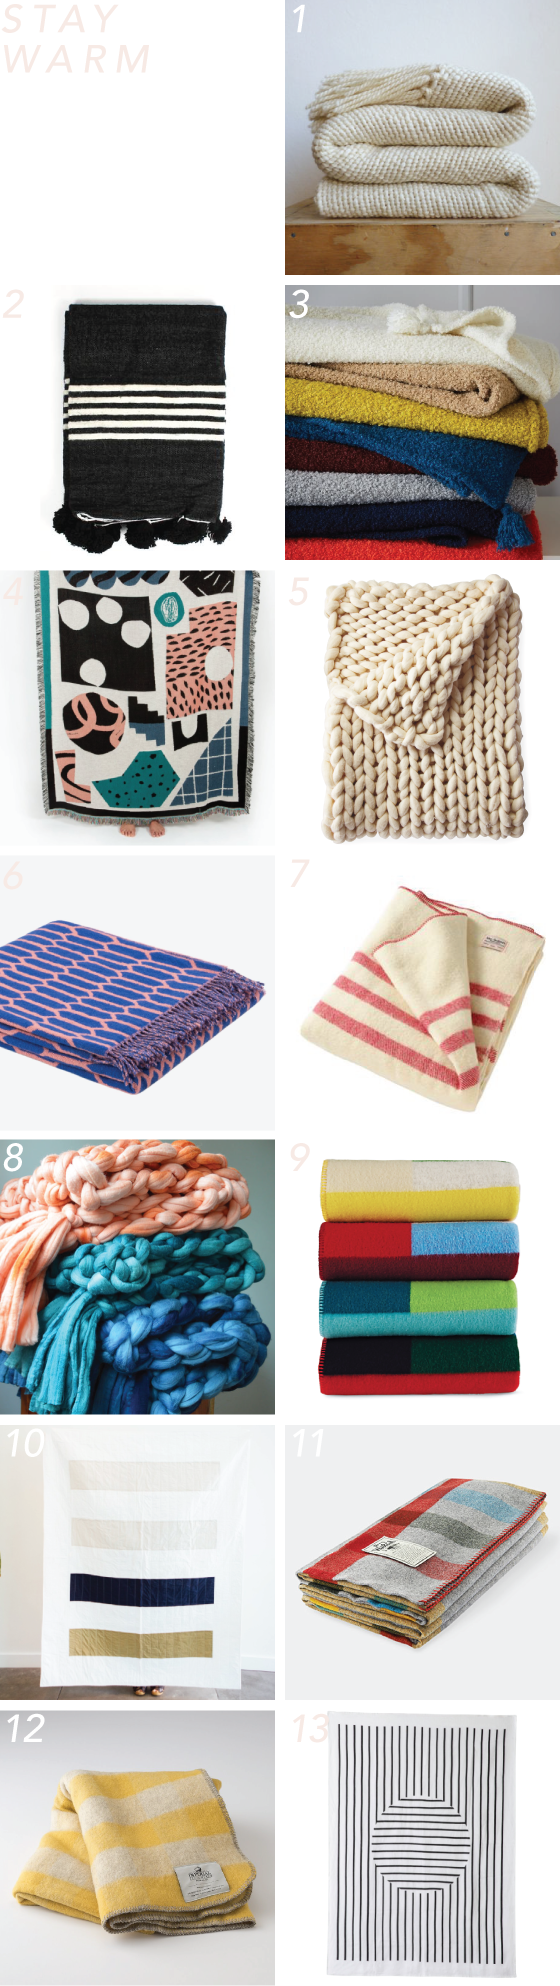 blankets-design-crush